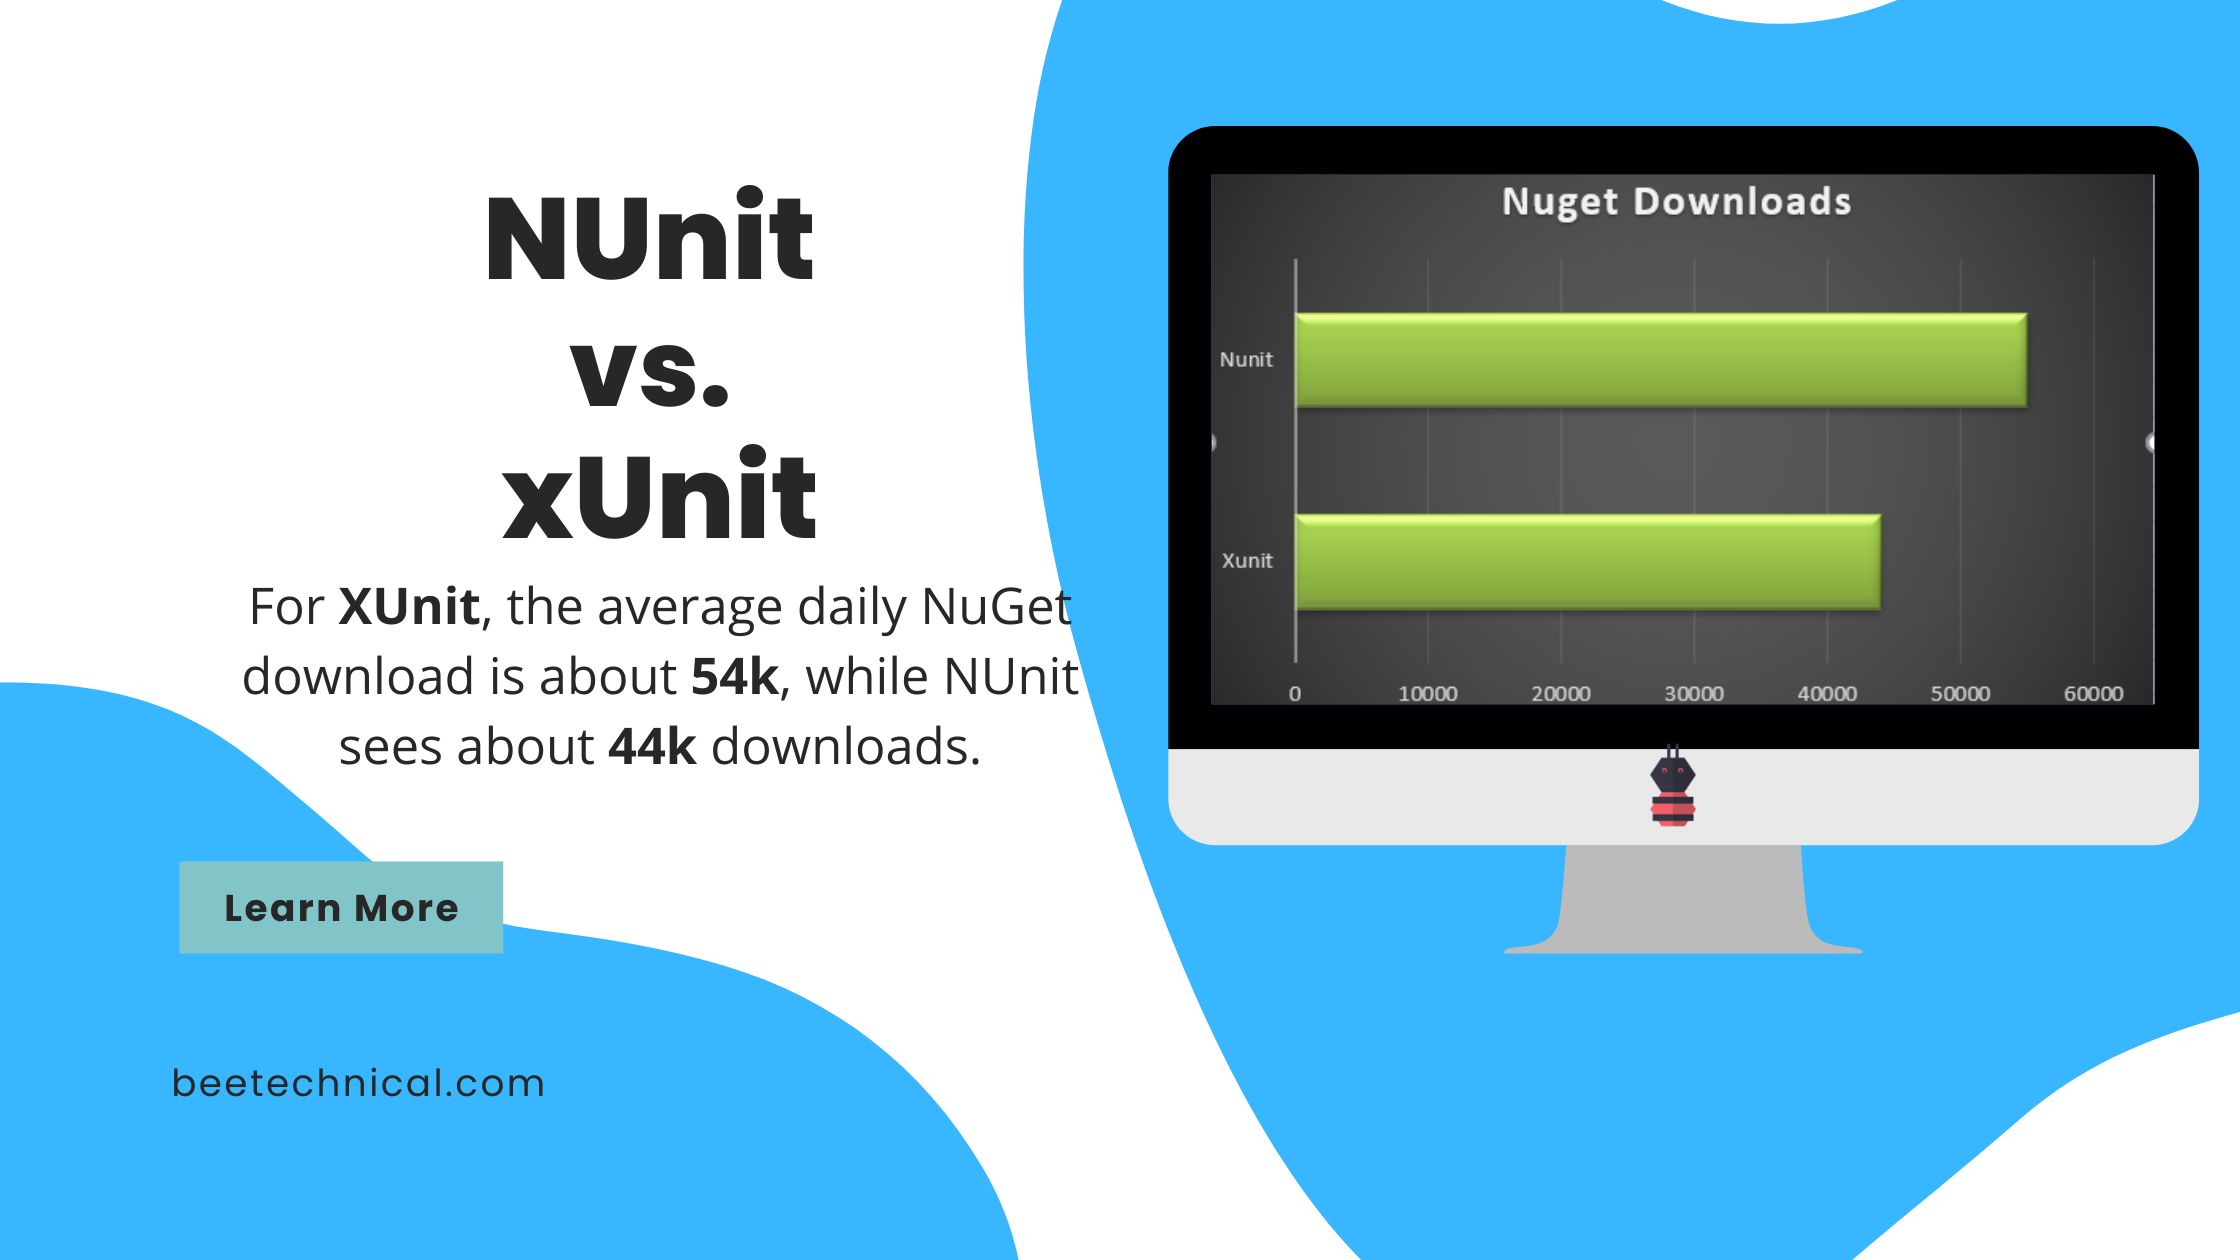 Nunit vs. xUnit